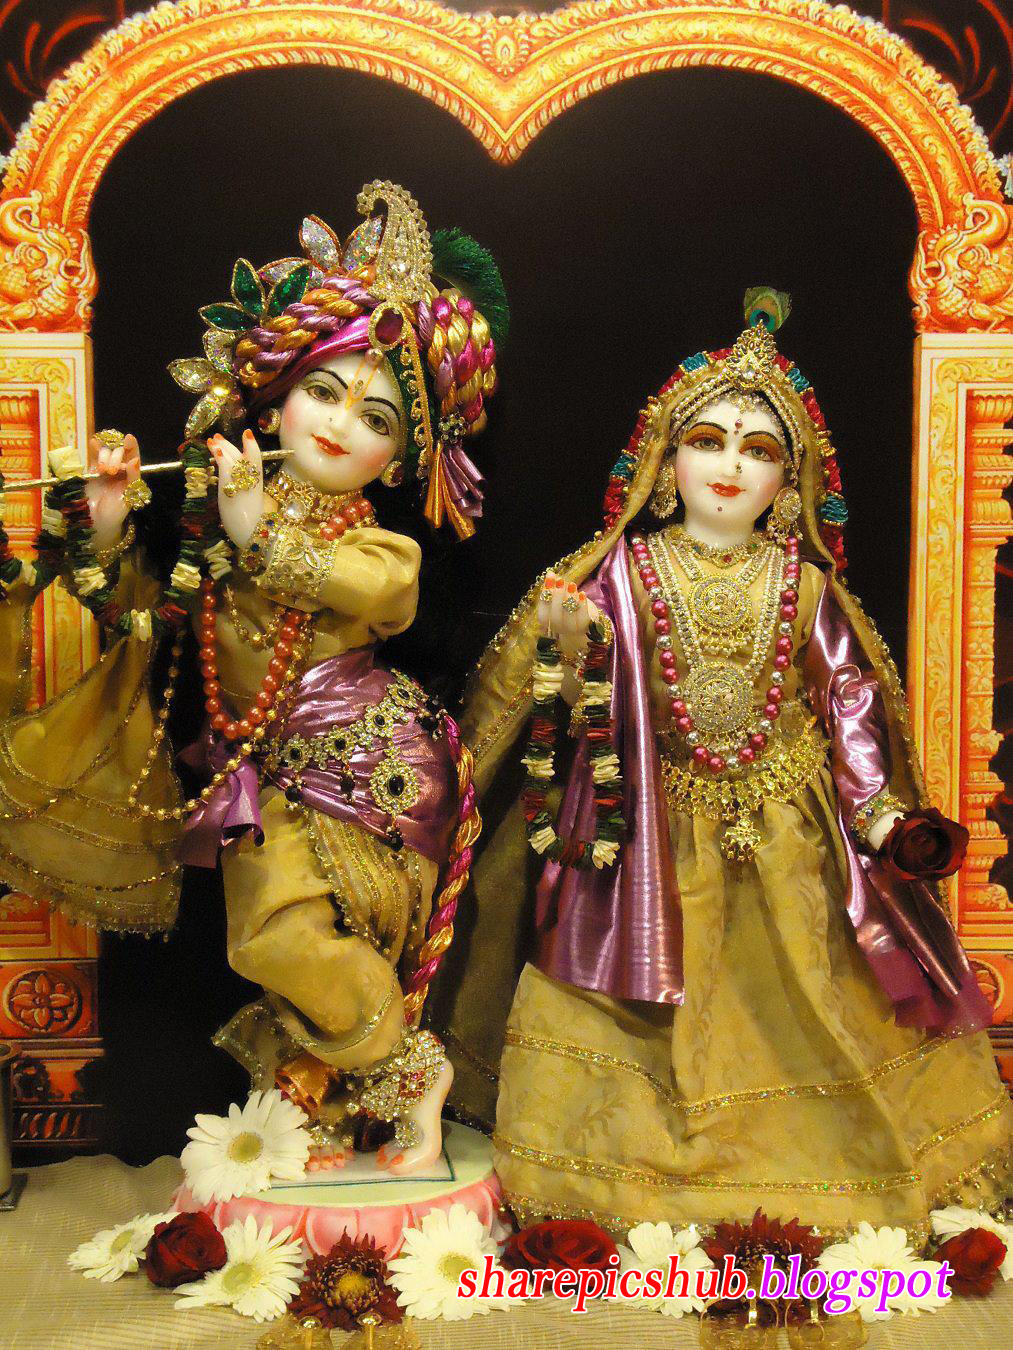 Lord Radha Krishna HD Pics | Beautiful Pic of Shree Radha Krishna | Share  Pics Hub